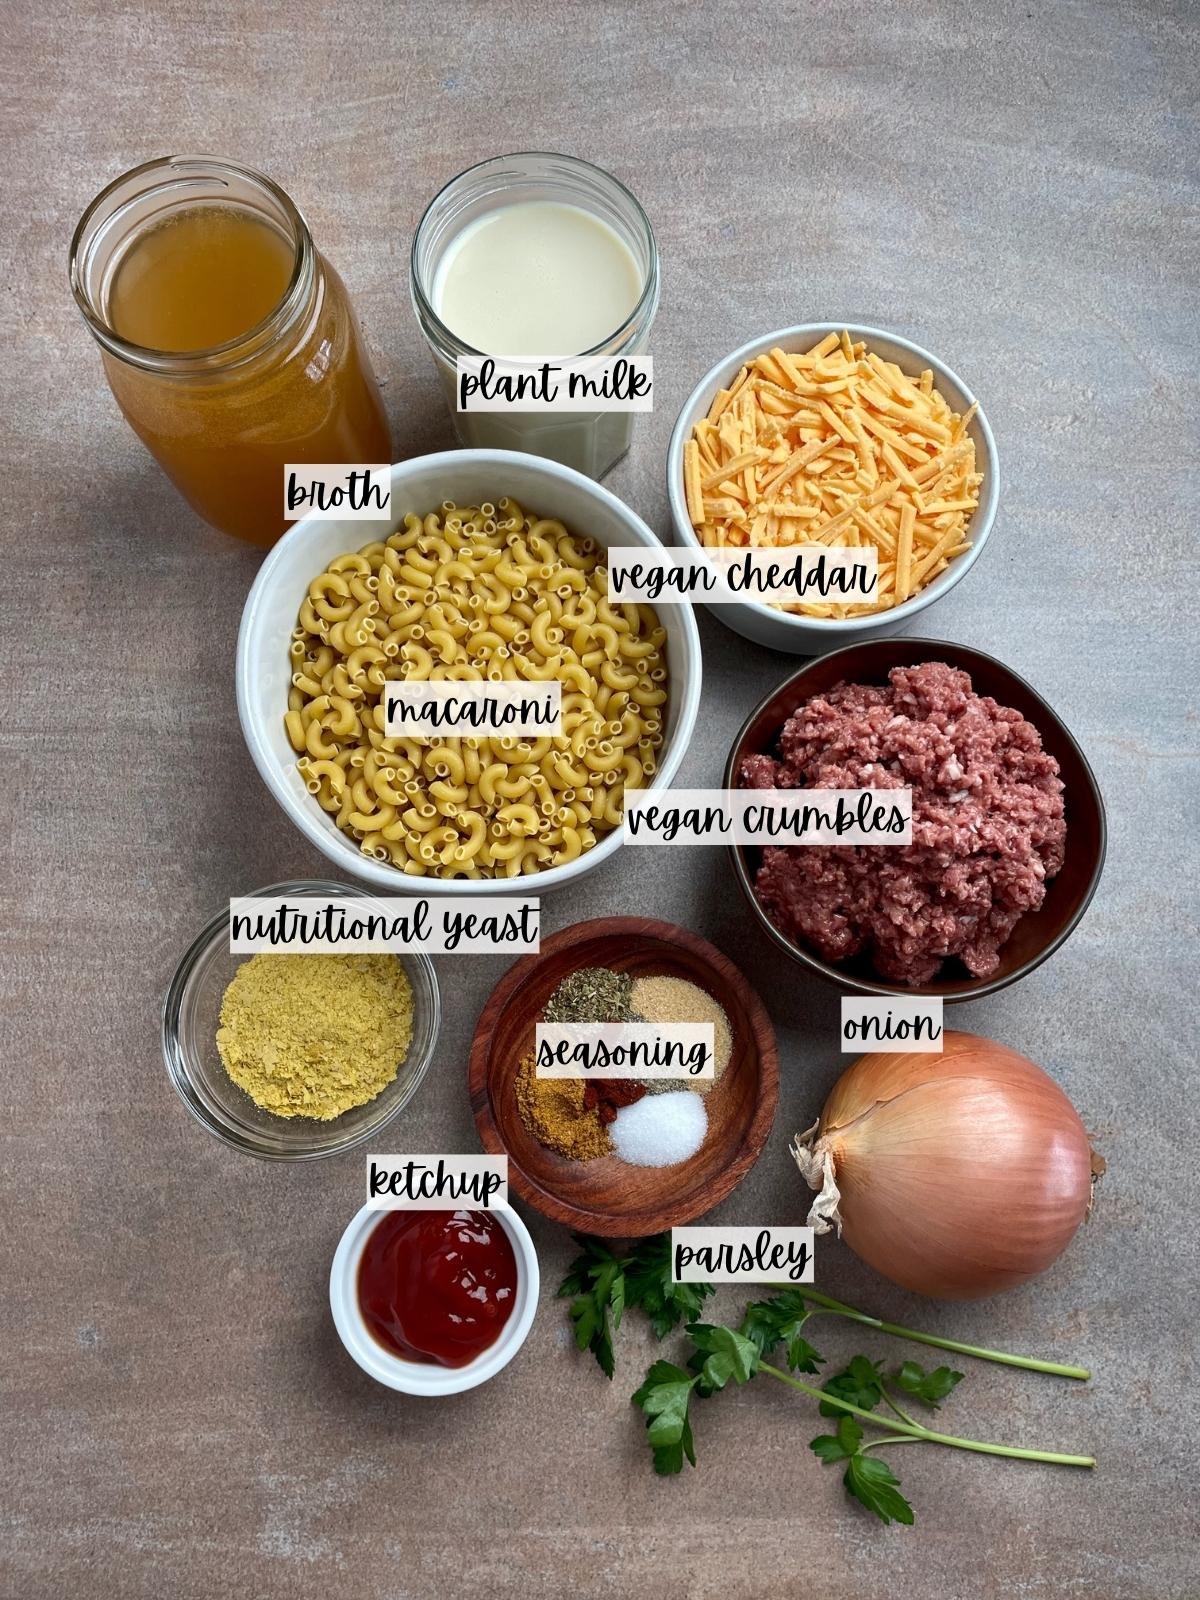 Labeled ingredients for hamburger helper.